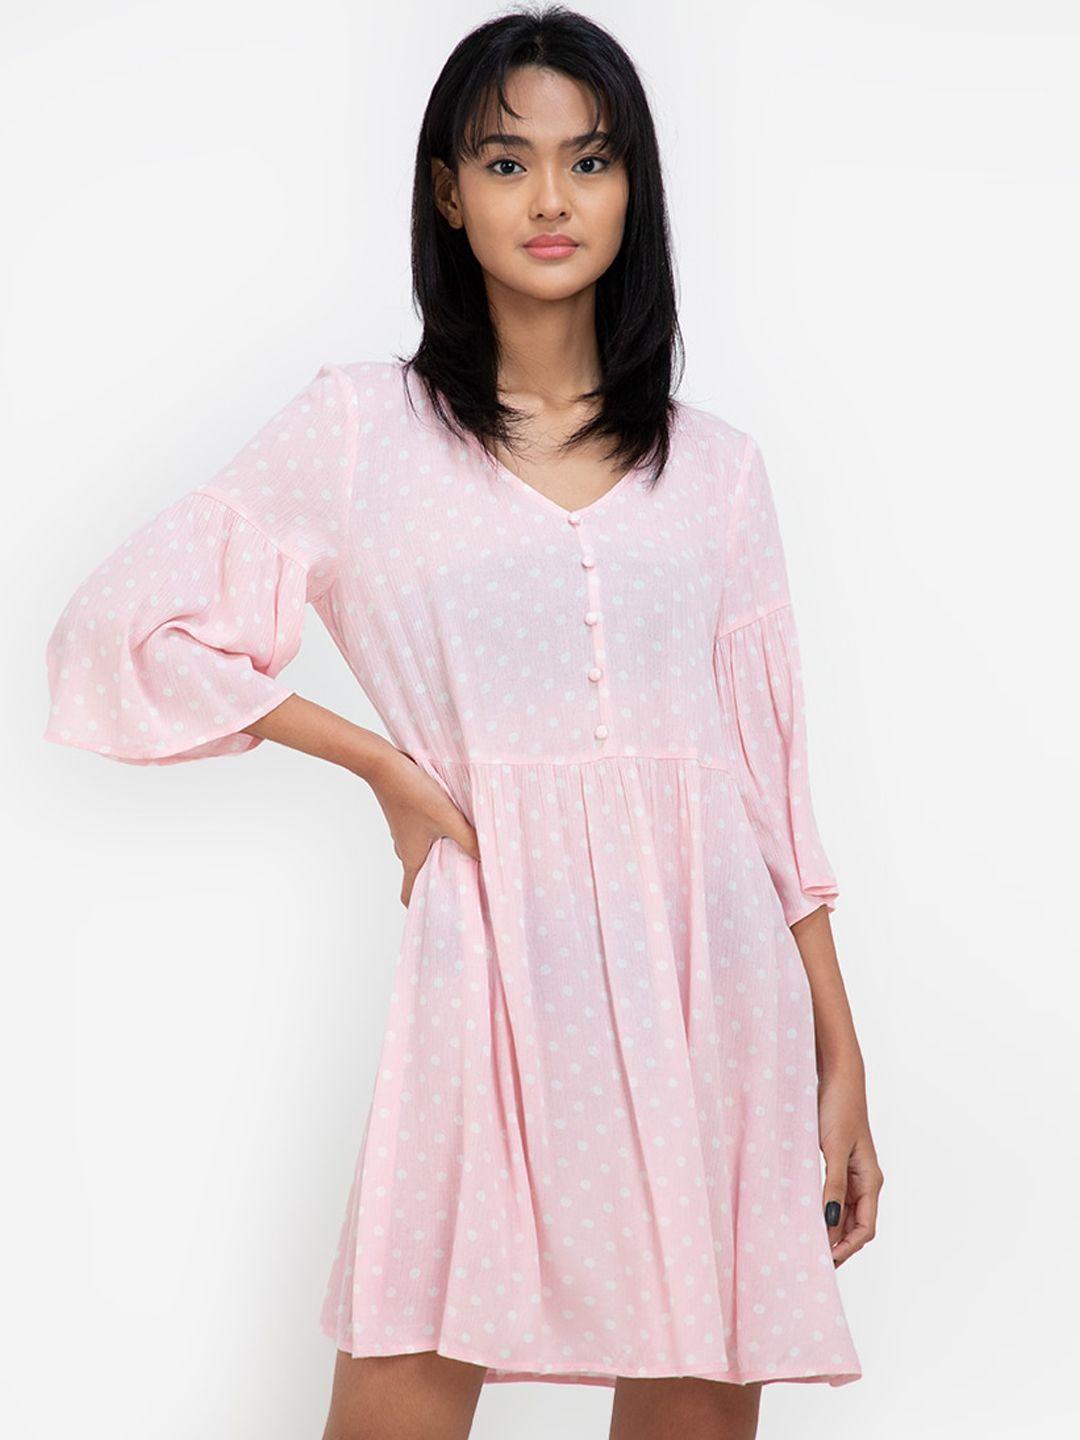 zalora basics pink & white polka dots printed a-line dress